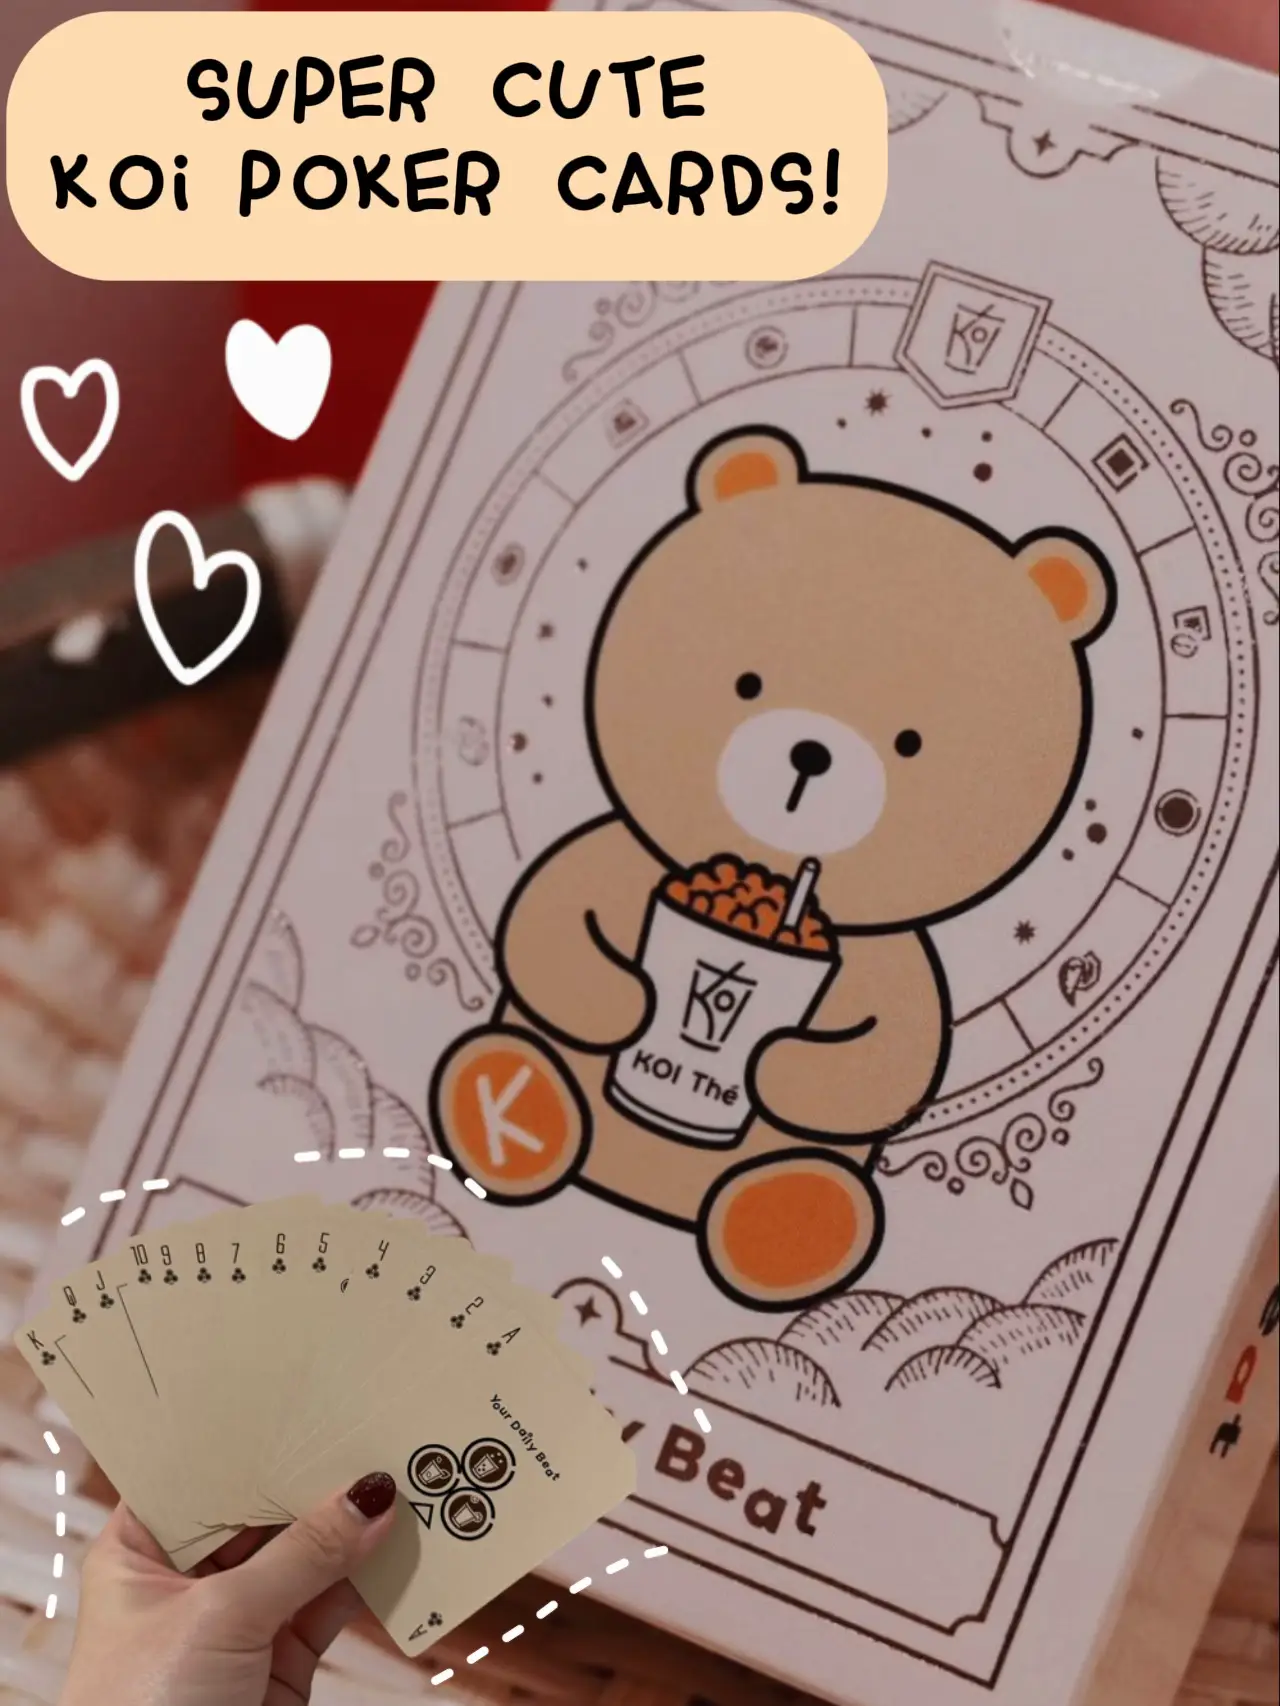 I got cute KOI BB Bear Poker Cards for free!!'s images(0)